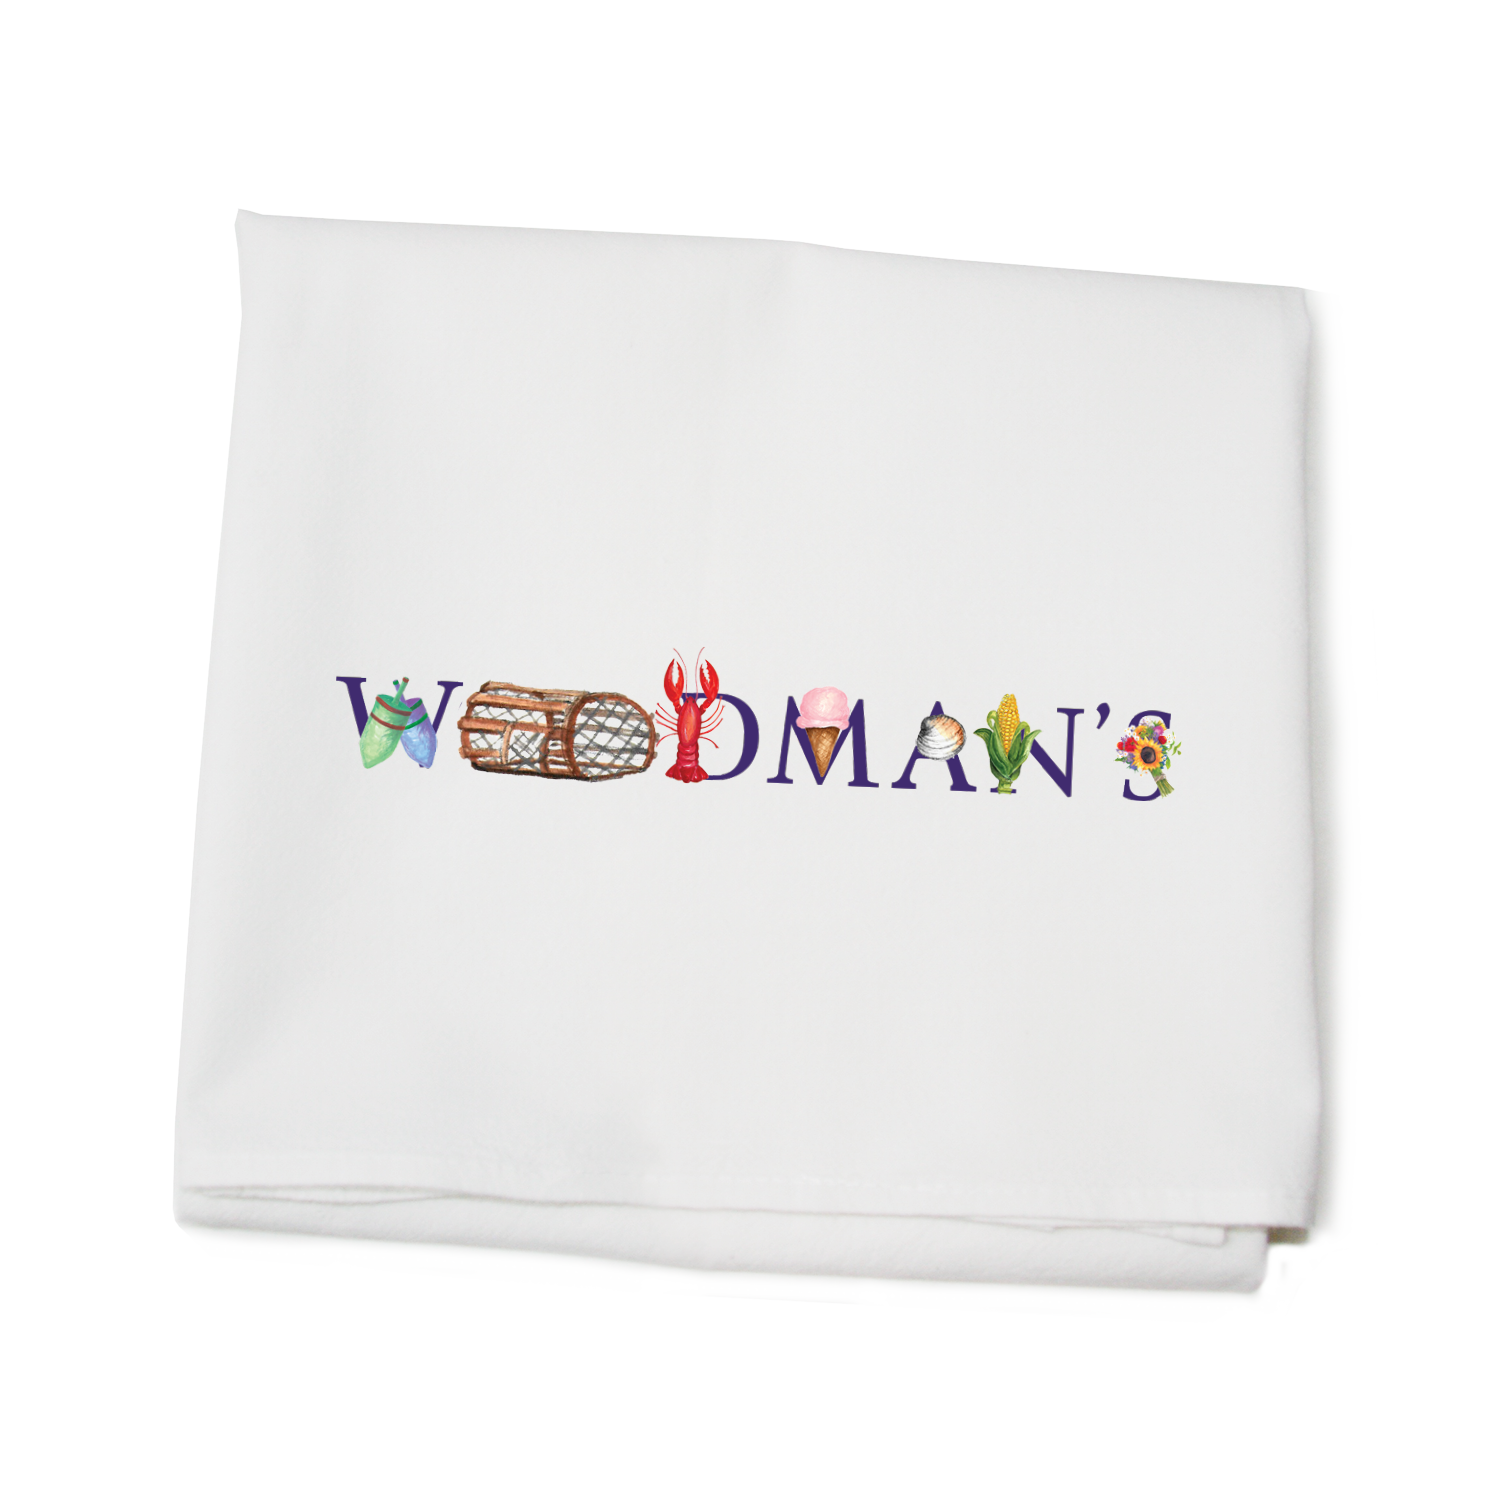 woodman's flour sack towel